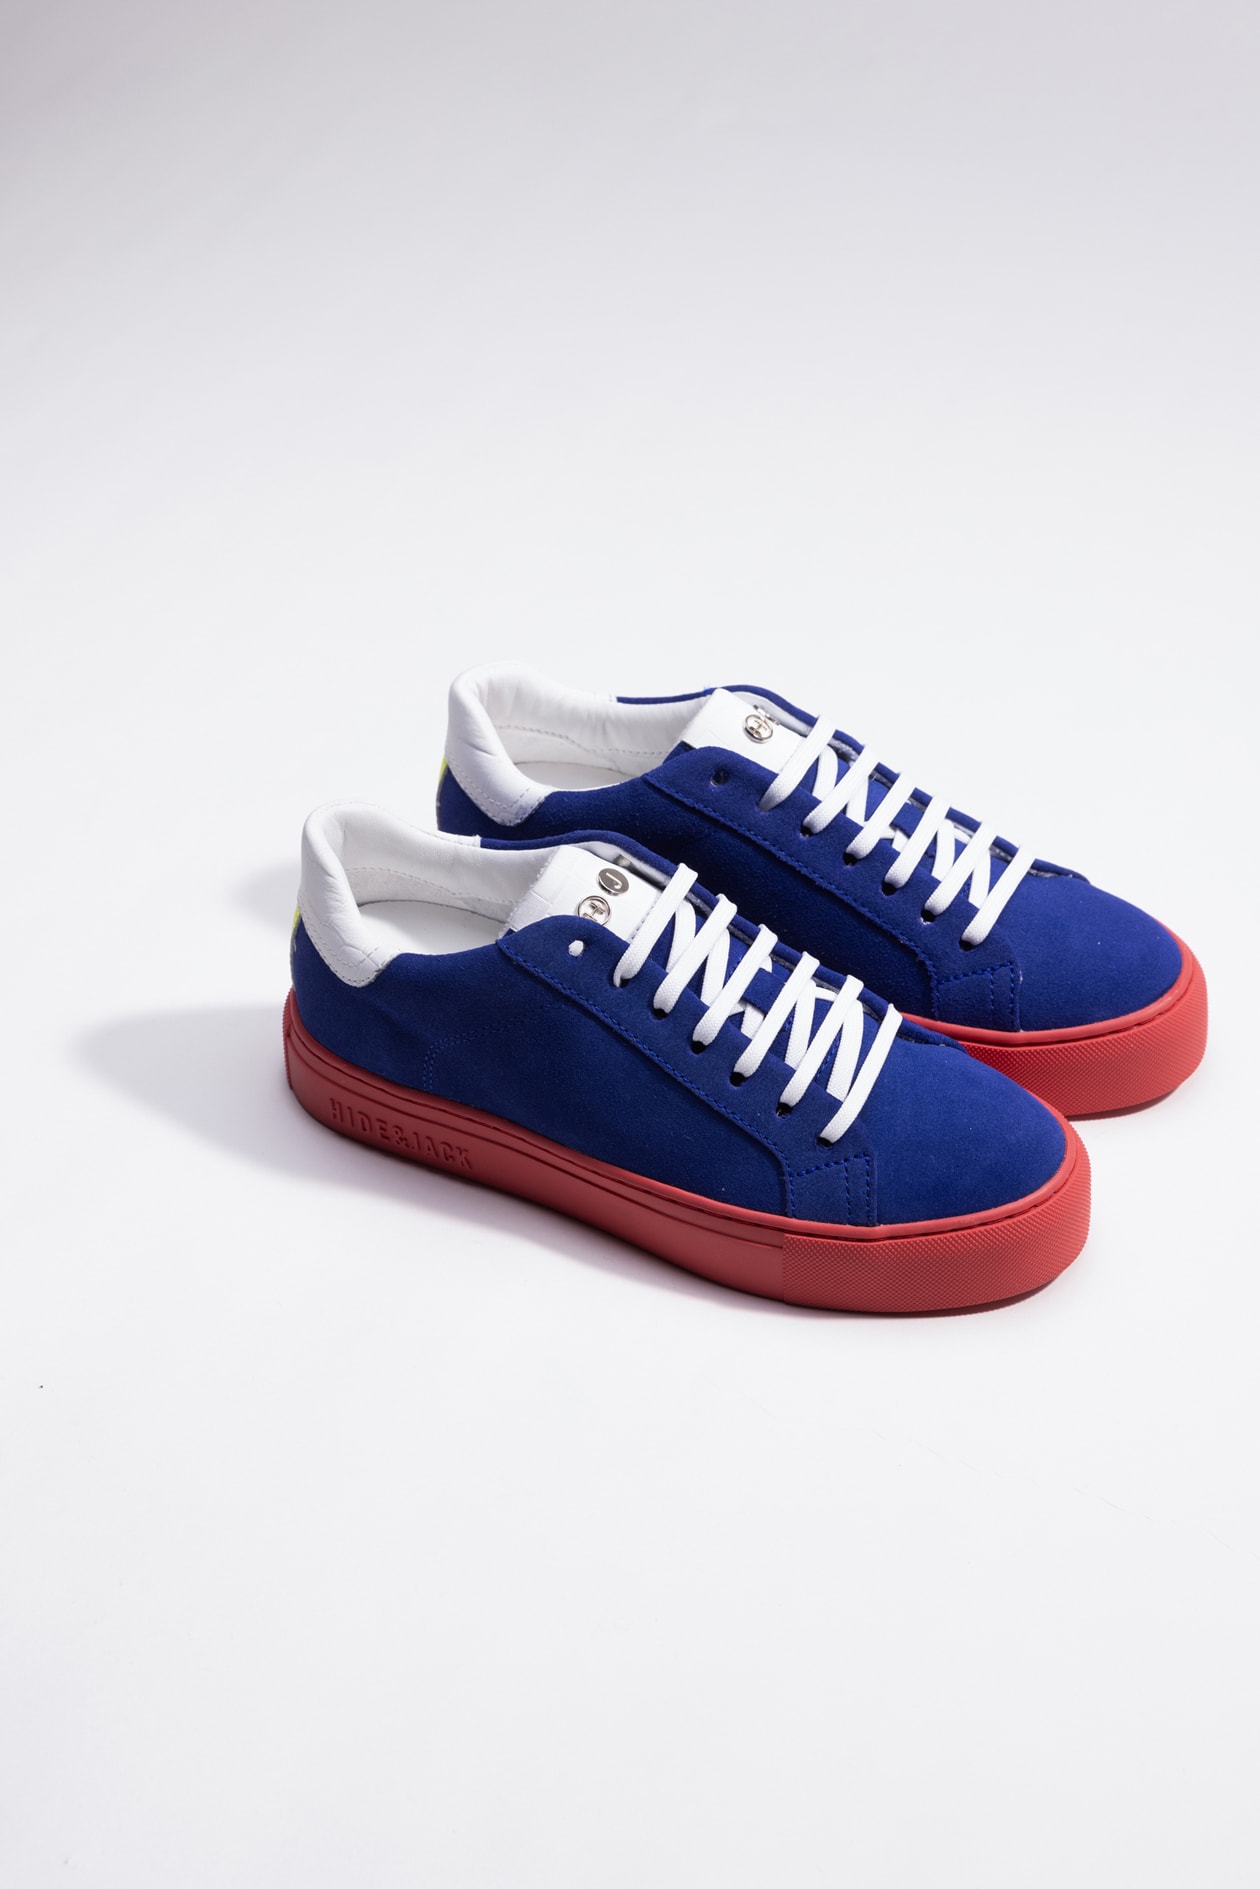 Hide & Jack Low Top Sneaker - Essence Oil Azure Red